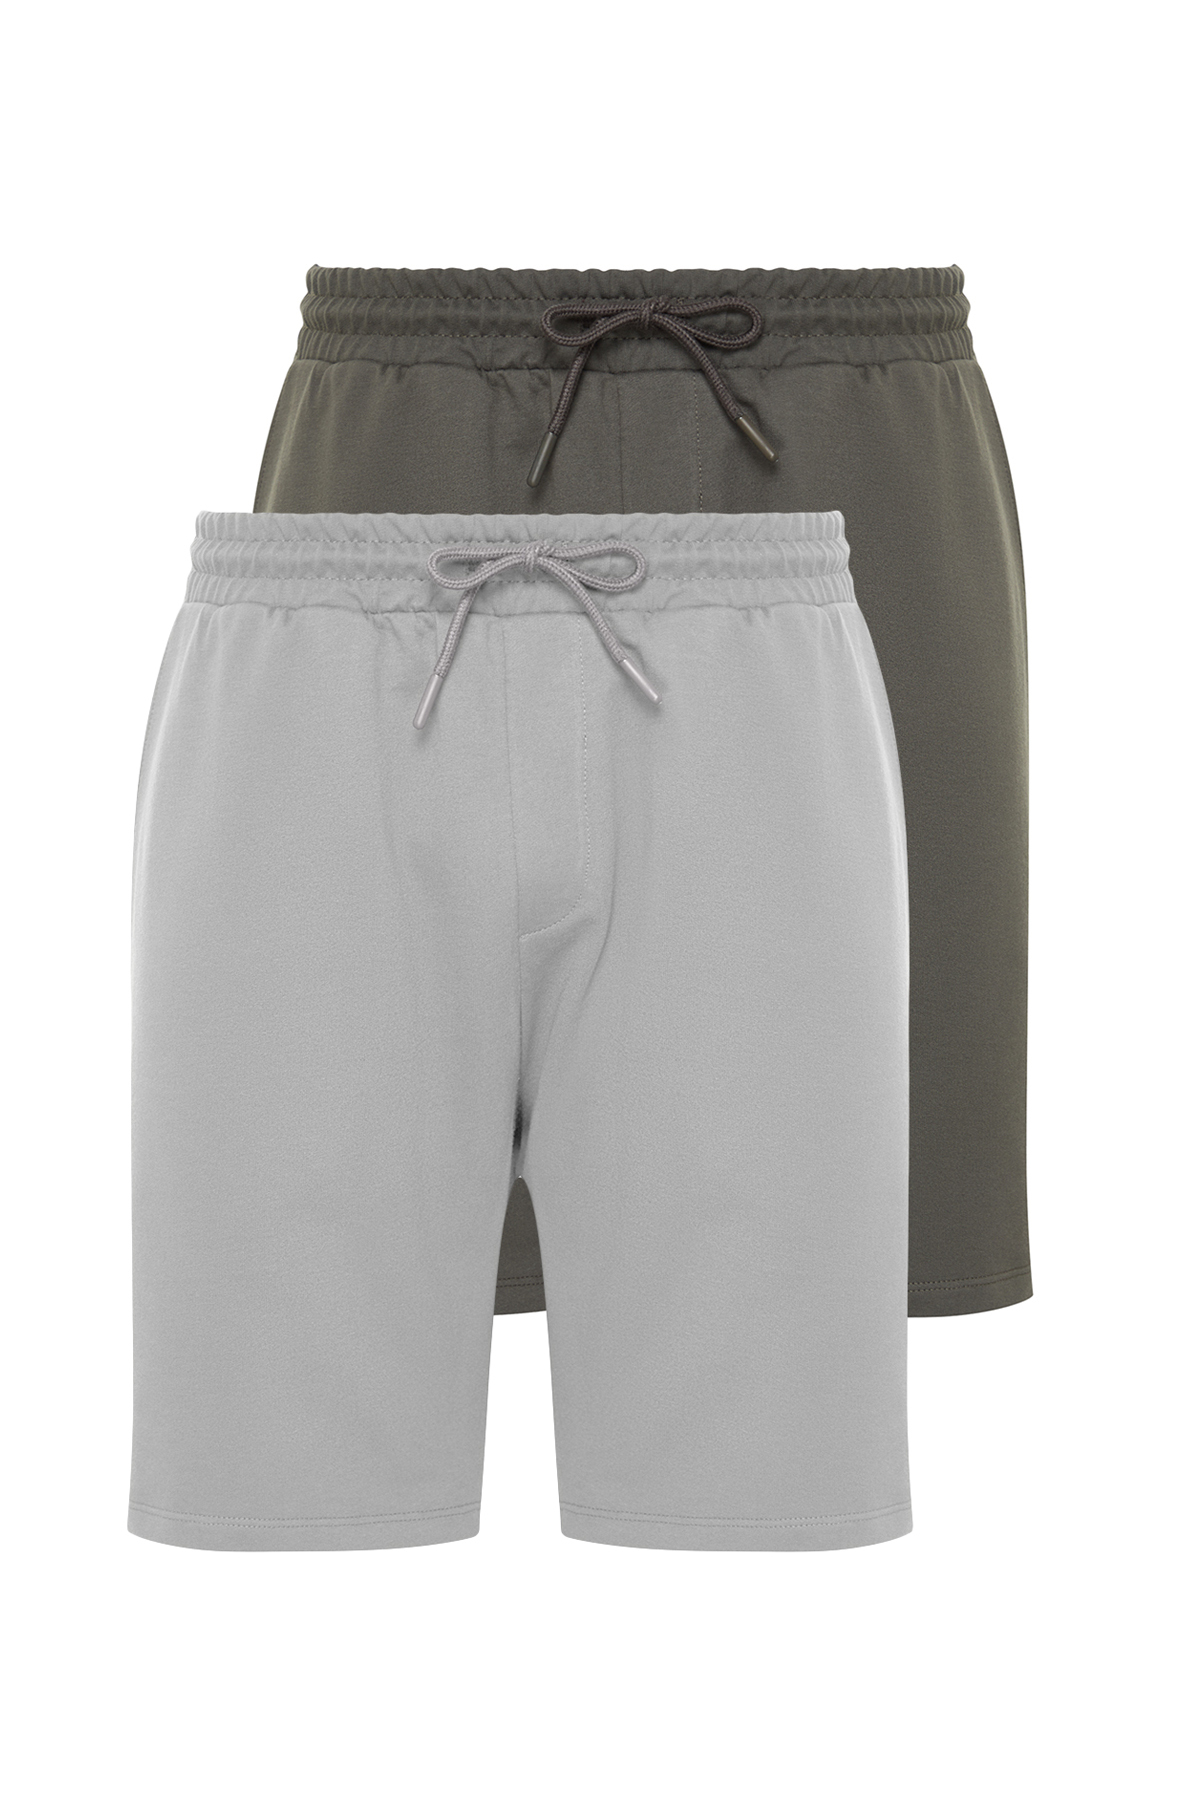 Trendyol Plus Size Anthracite-Grey Men's 2-Pack Regular 100% Cotton Comfortable Shorts